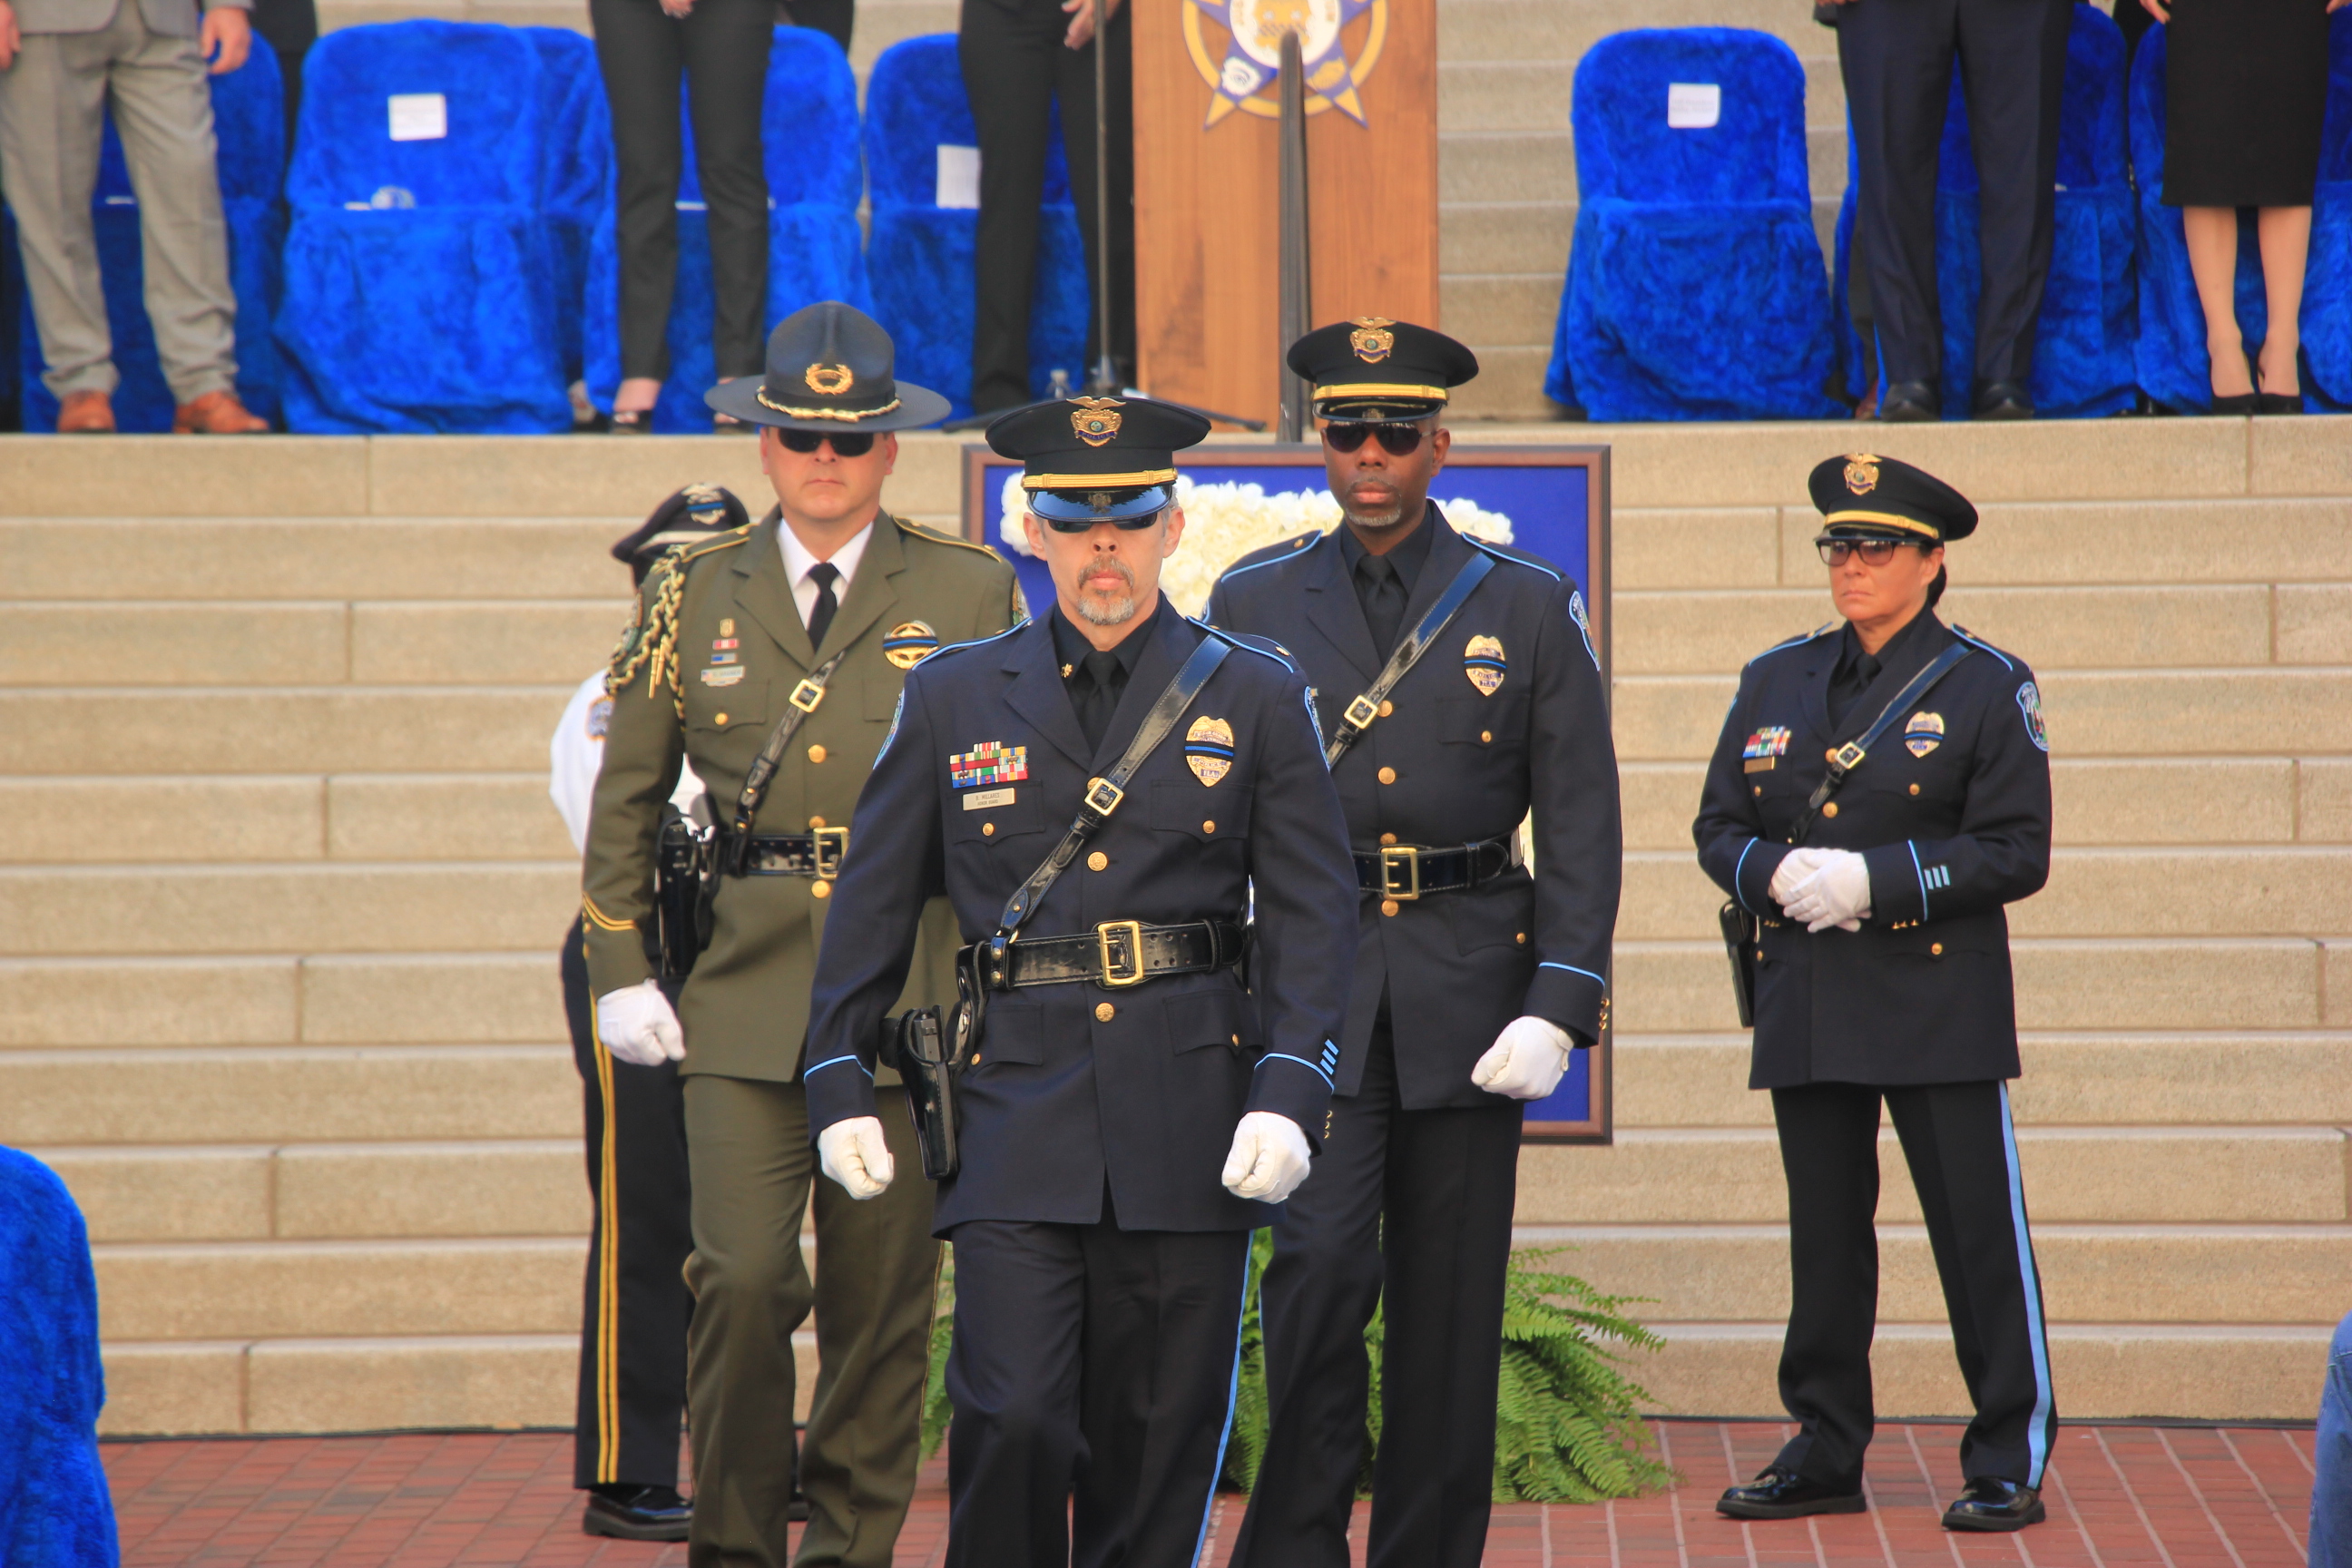 Fraternal Order of Police Memorial Service